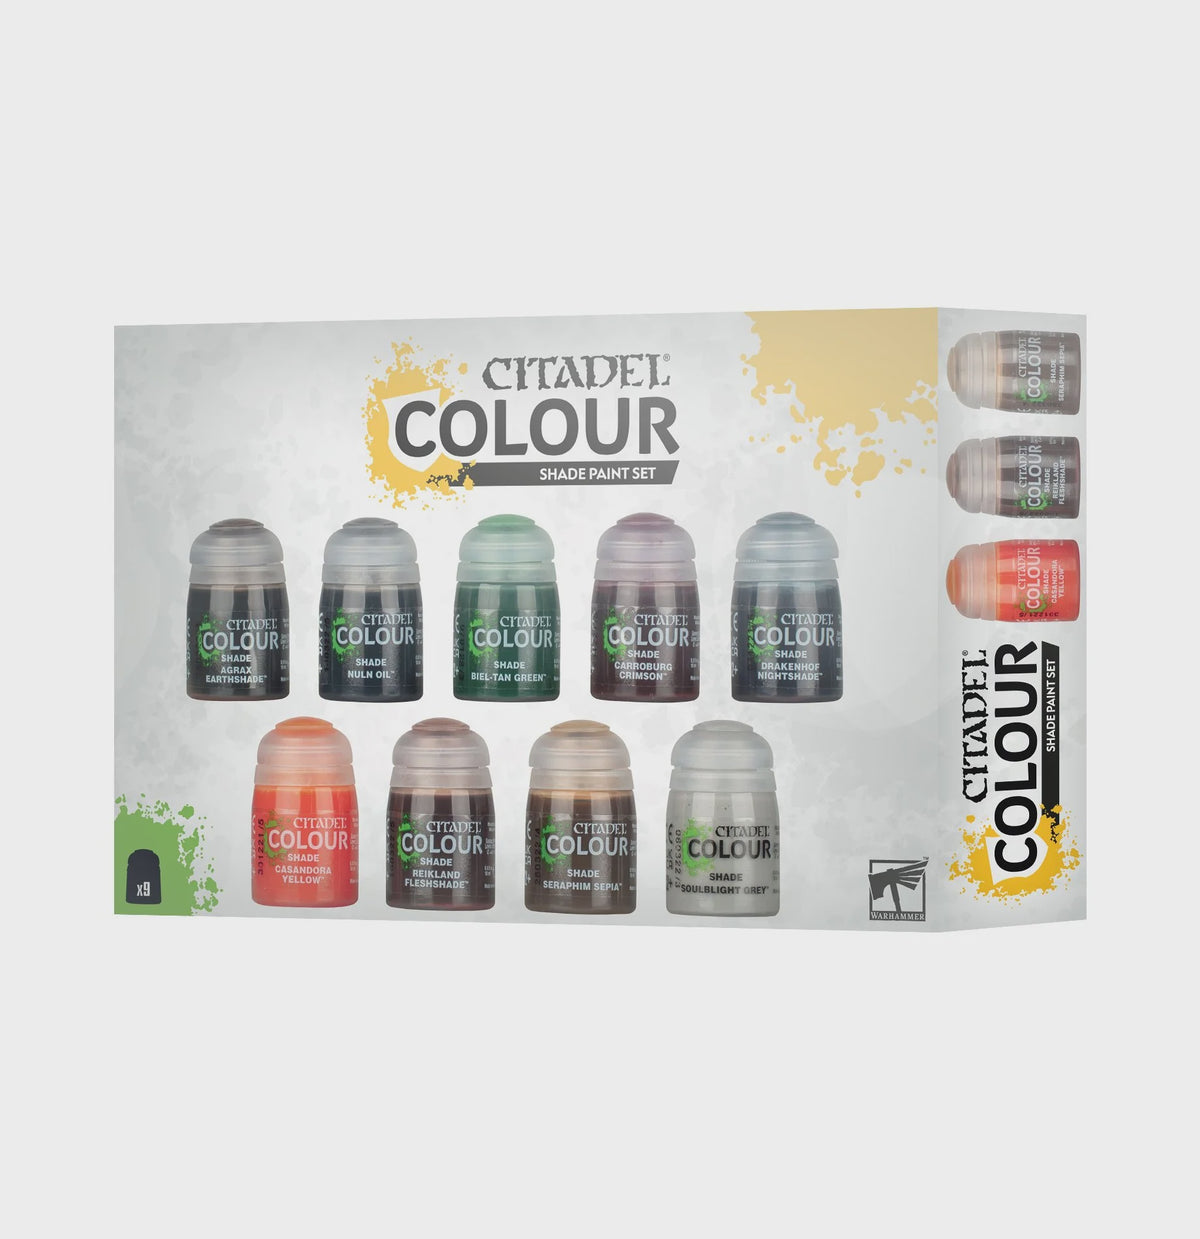 Citadel Colour Shade Paint Set 6049